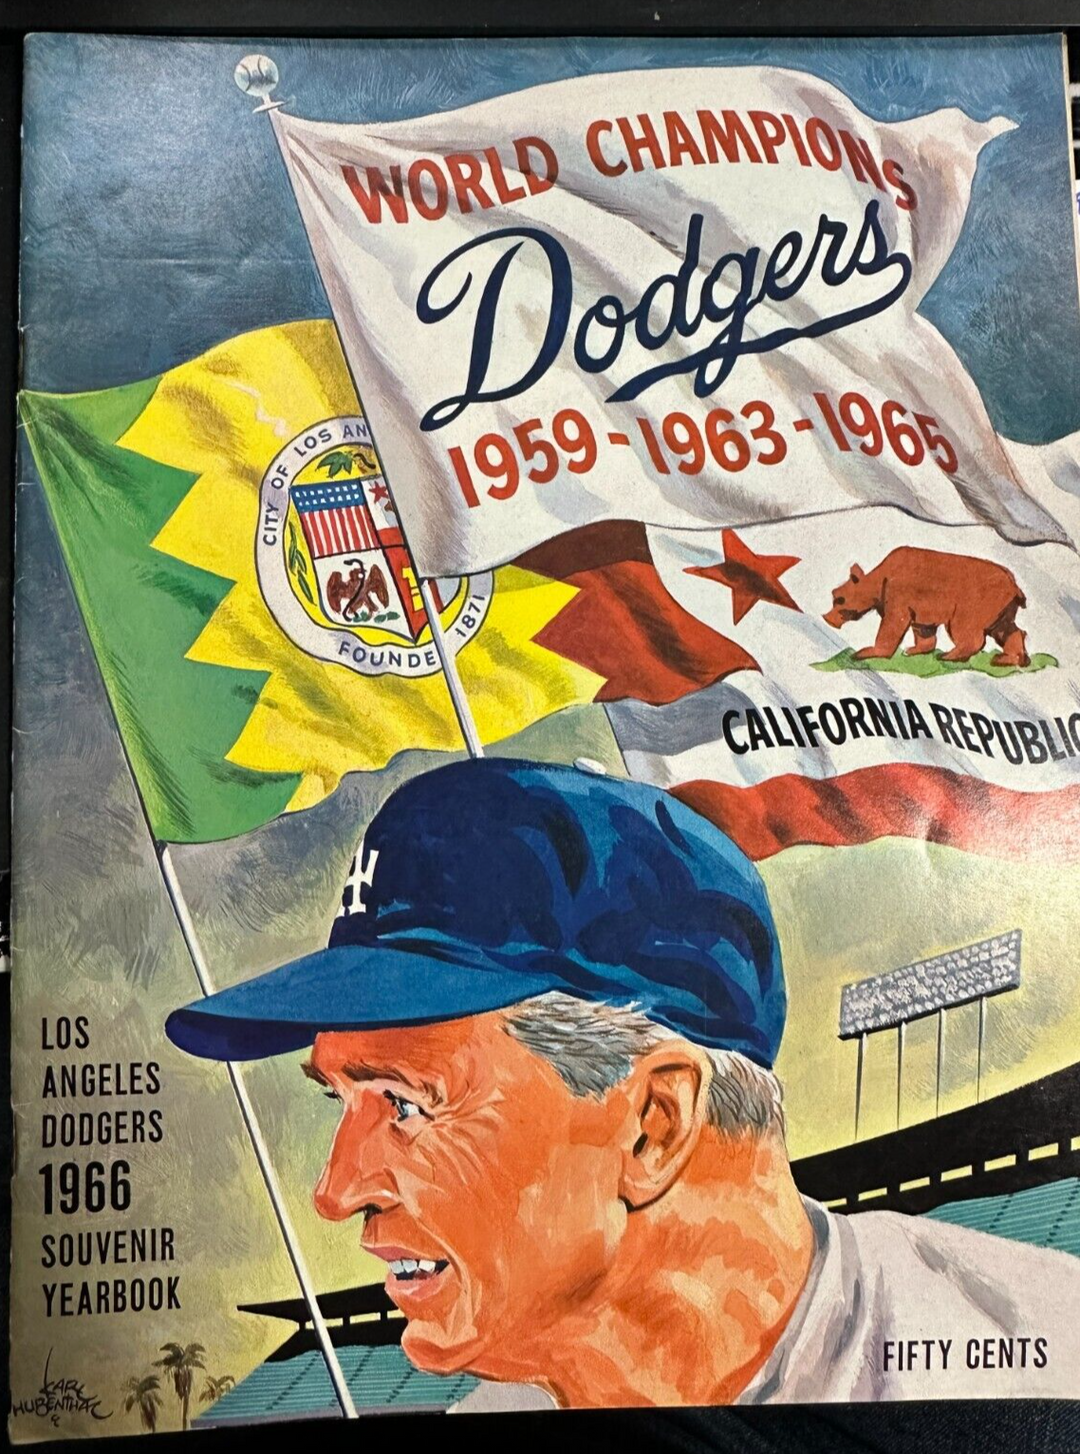 1966 Los Angeles Dodgers Baseball Yearbook Koufax Drysdale